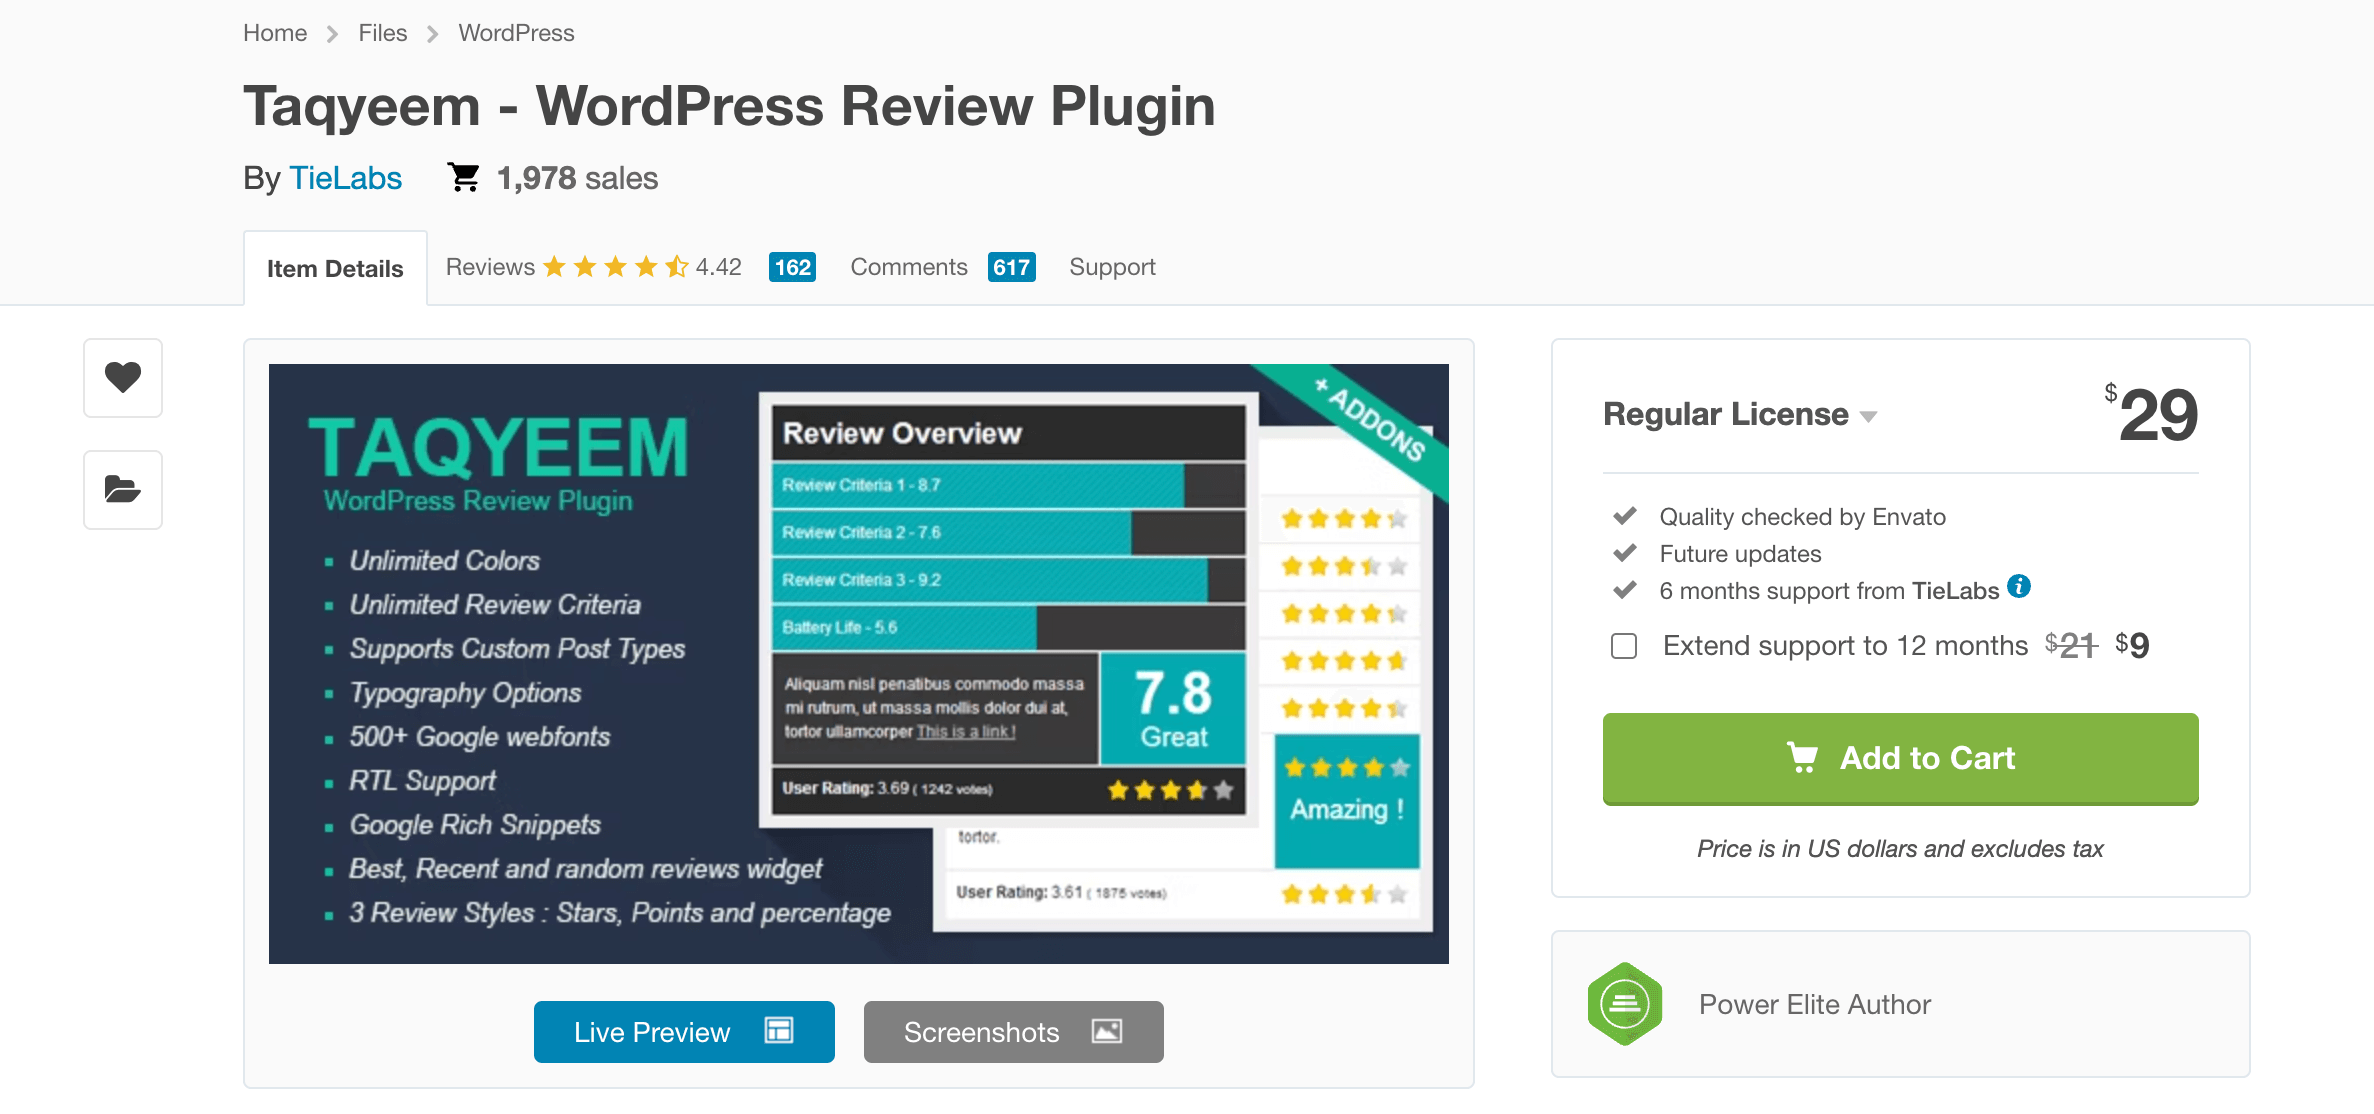 Taqyeem - WordPress Review Plugin Download Page